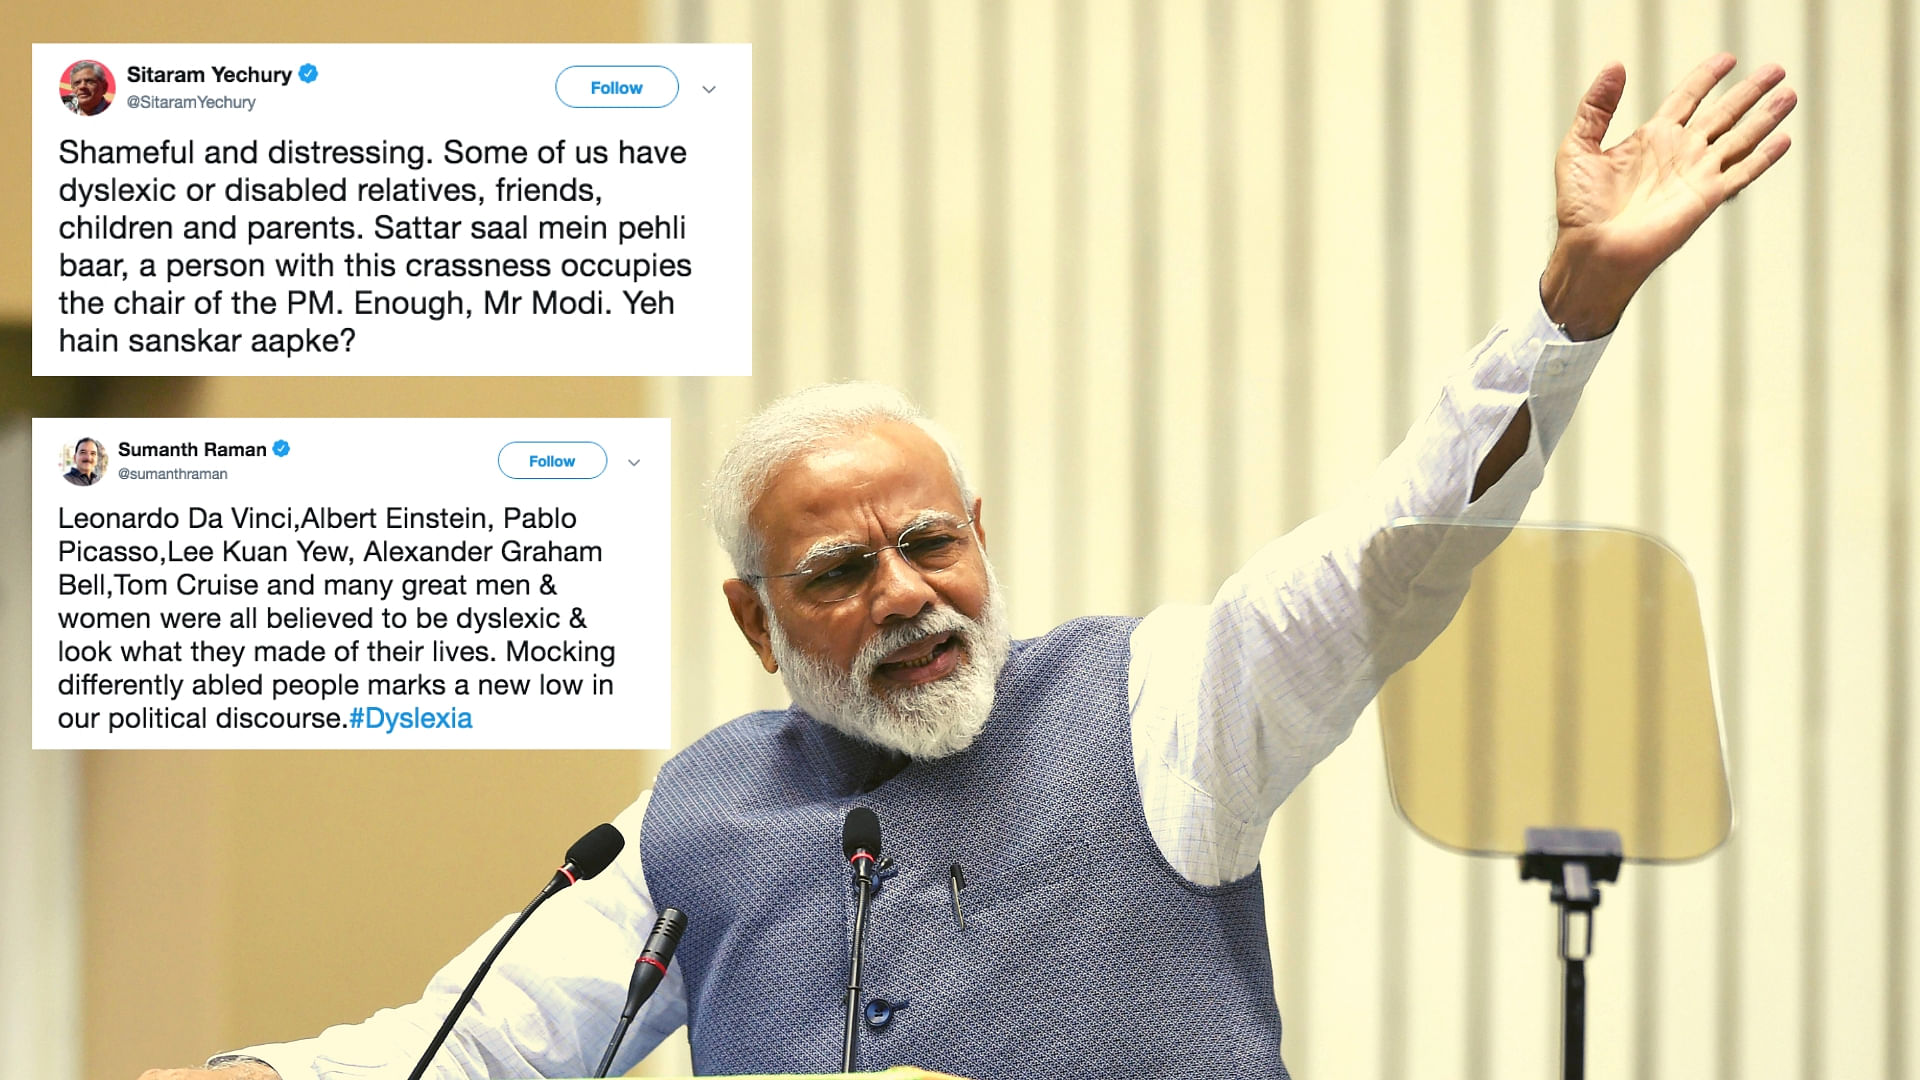 Pm Modi Dyslexia Comment Pm Narendra Modi Cracks Joke On Dyslexia Twitter Calls It Shameful